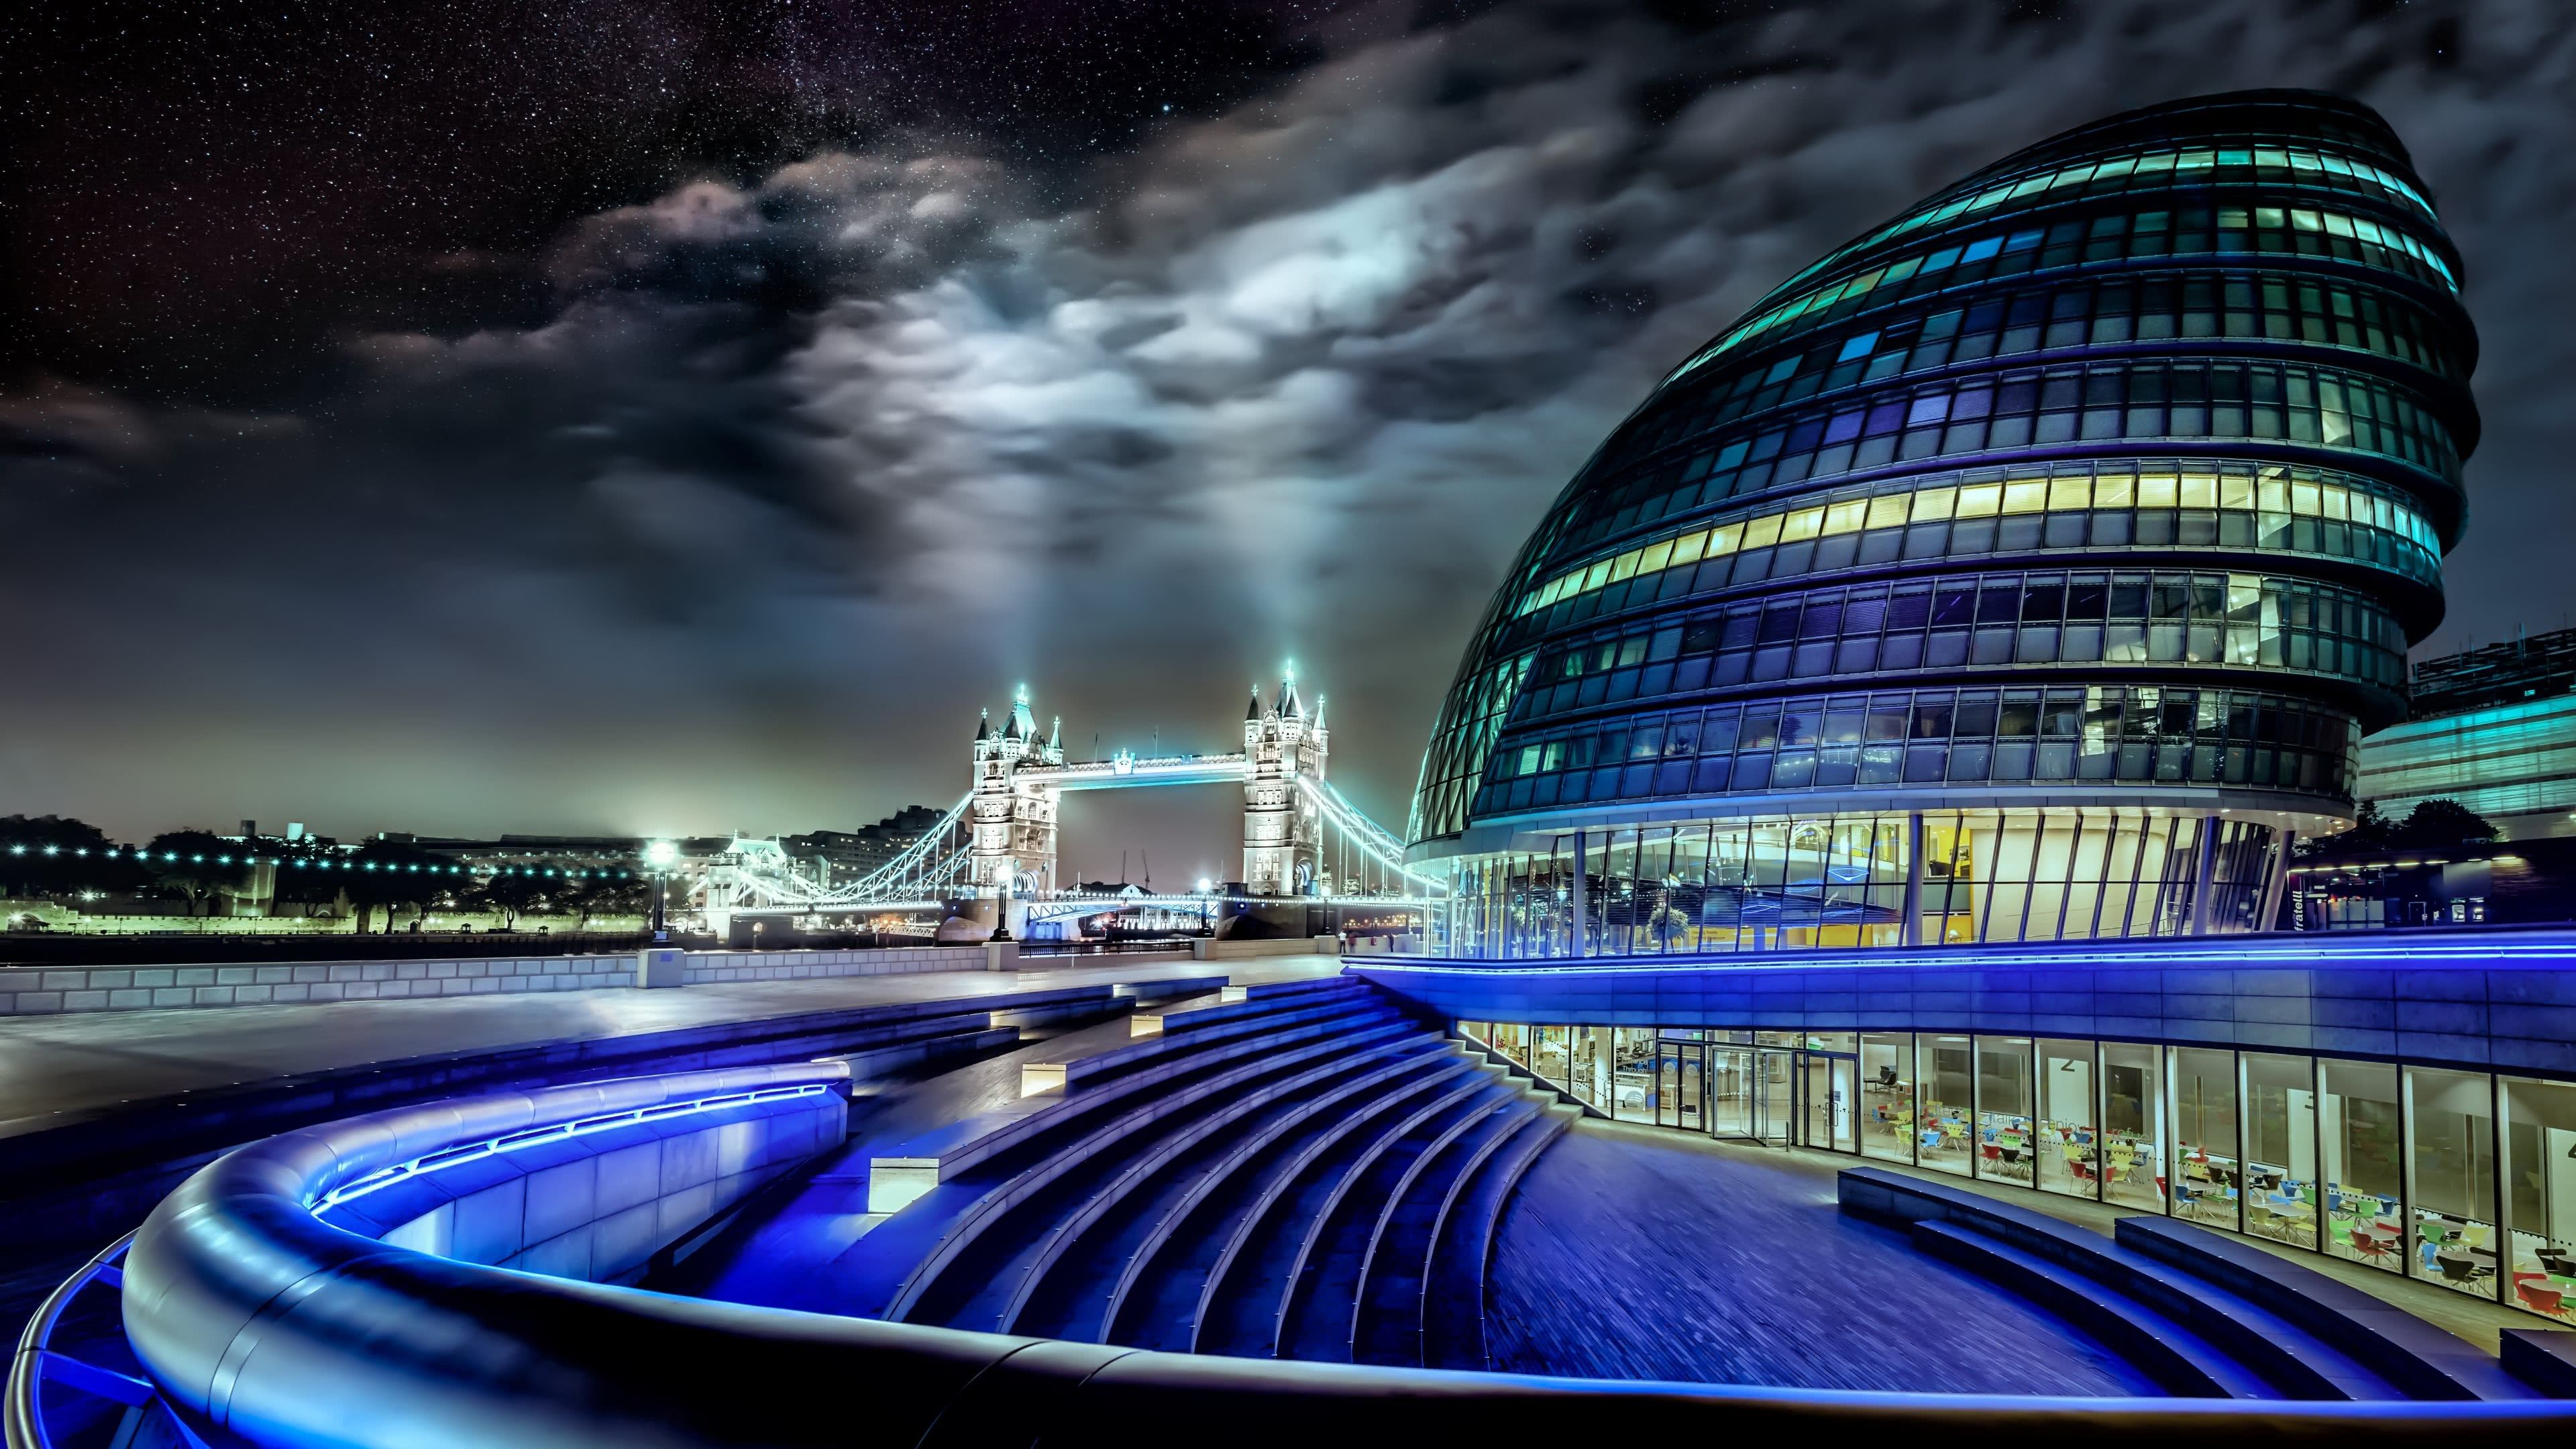 City Hall At Night London, United Kingdom UHD 4K Wallpaper